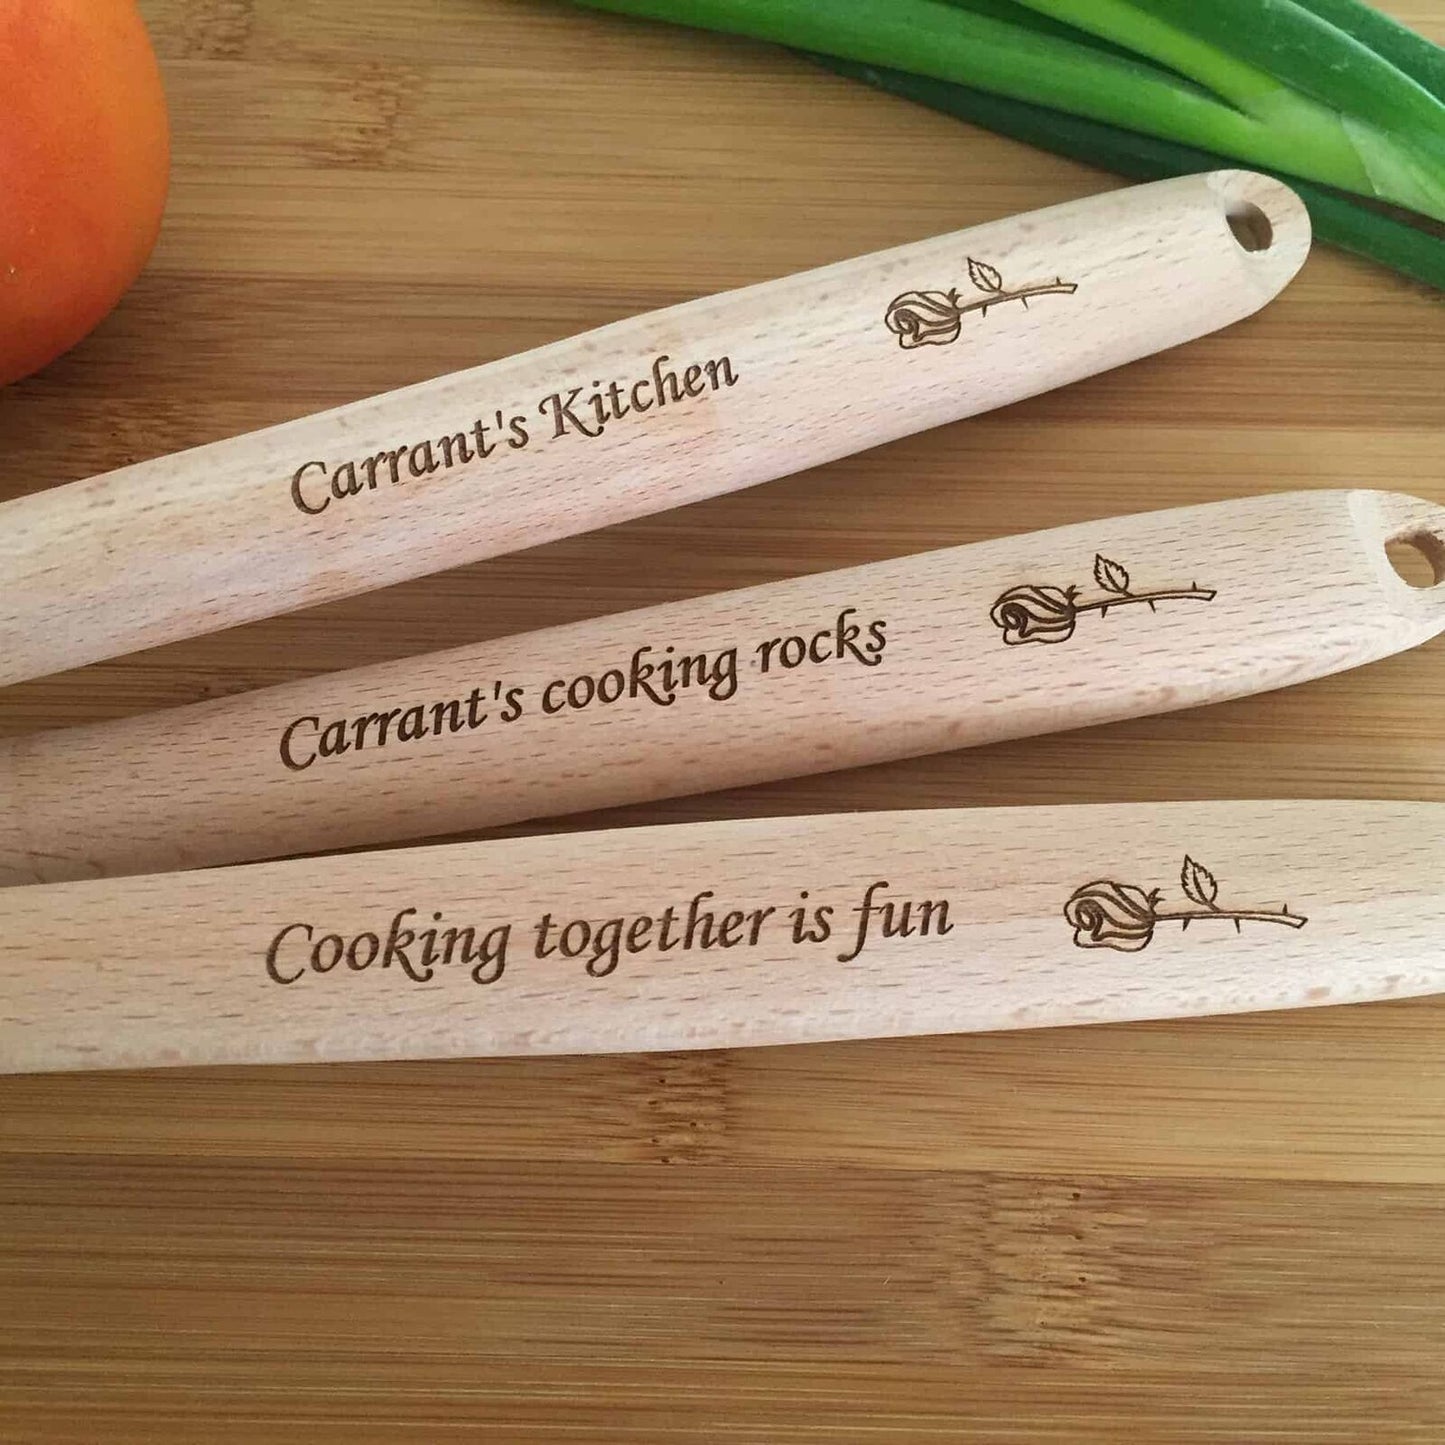 3 Pcs Wooden favour Wedding Spoon Gift Set